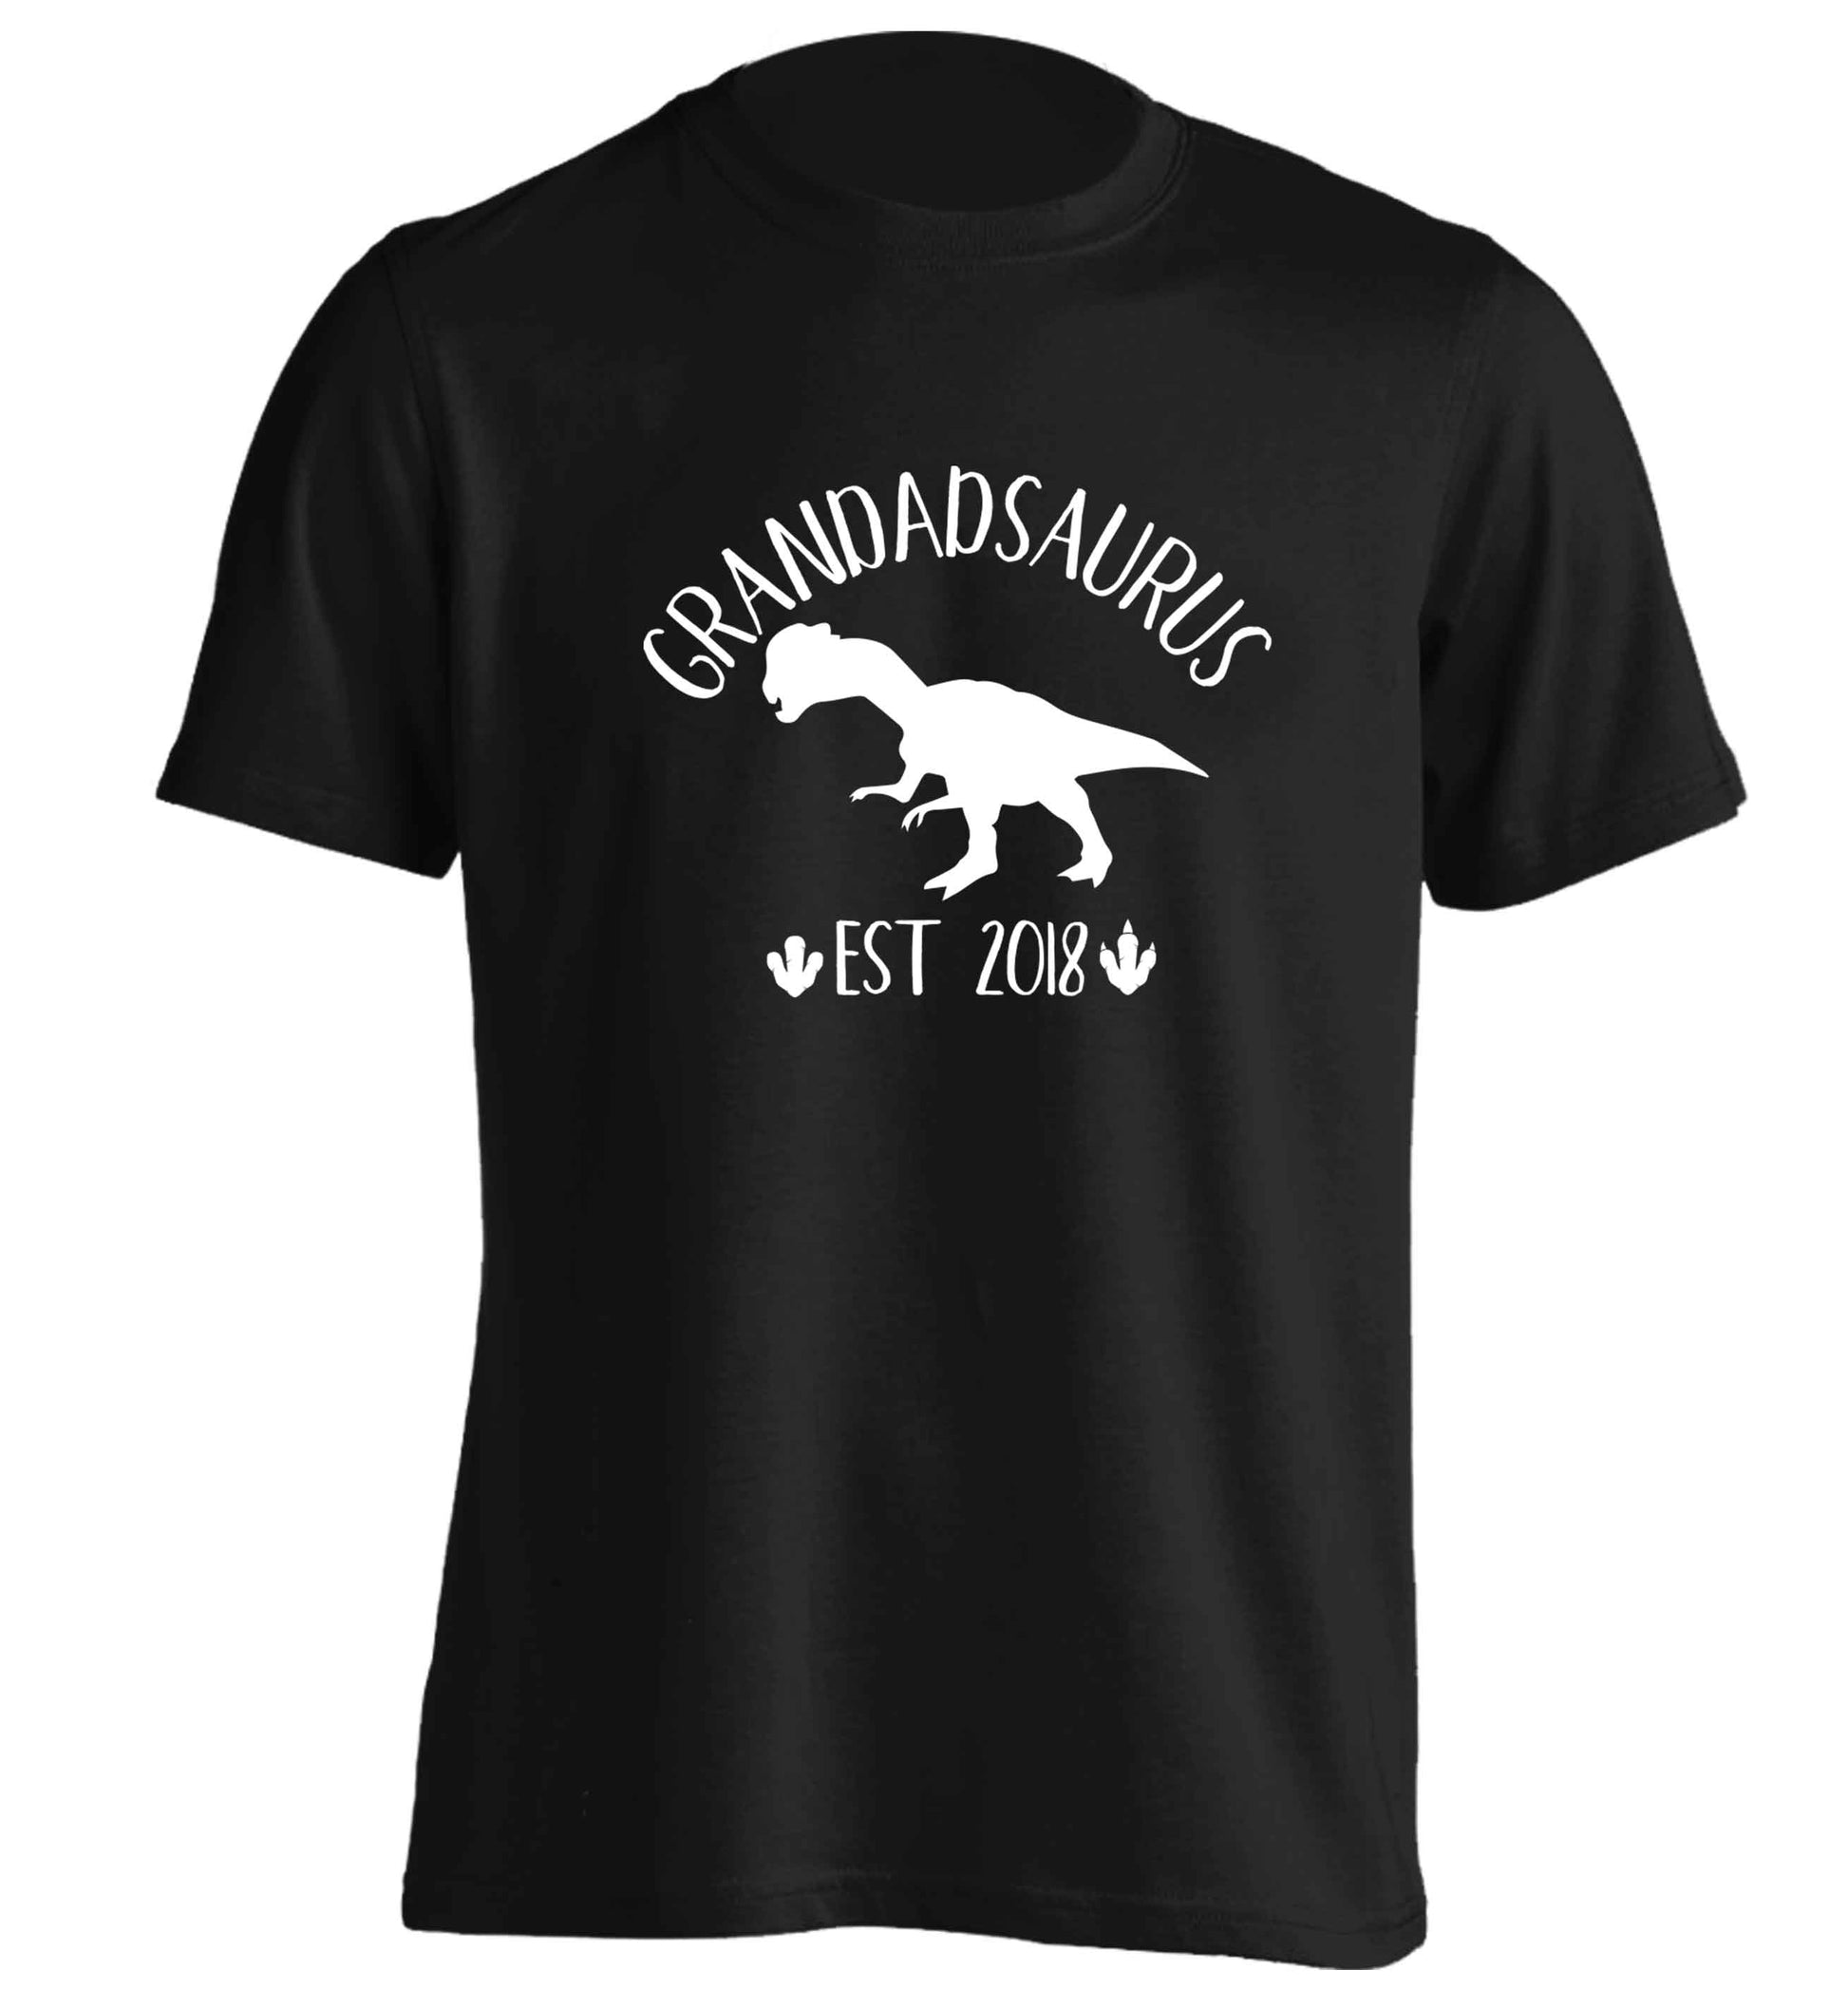 Personalised grandadsaurus since (custom date) adults unisex black Tshirt 2XL